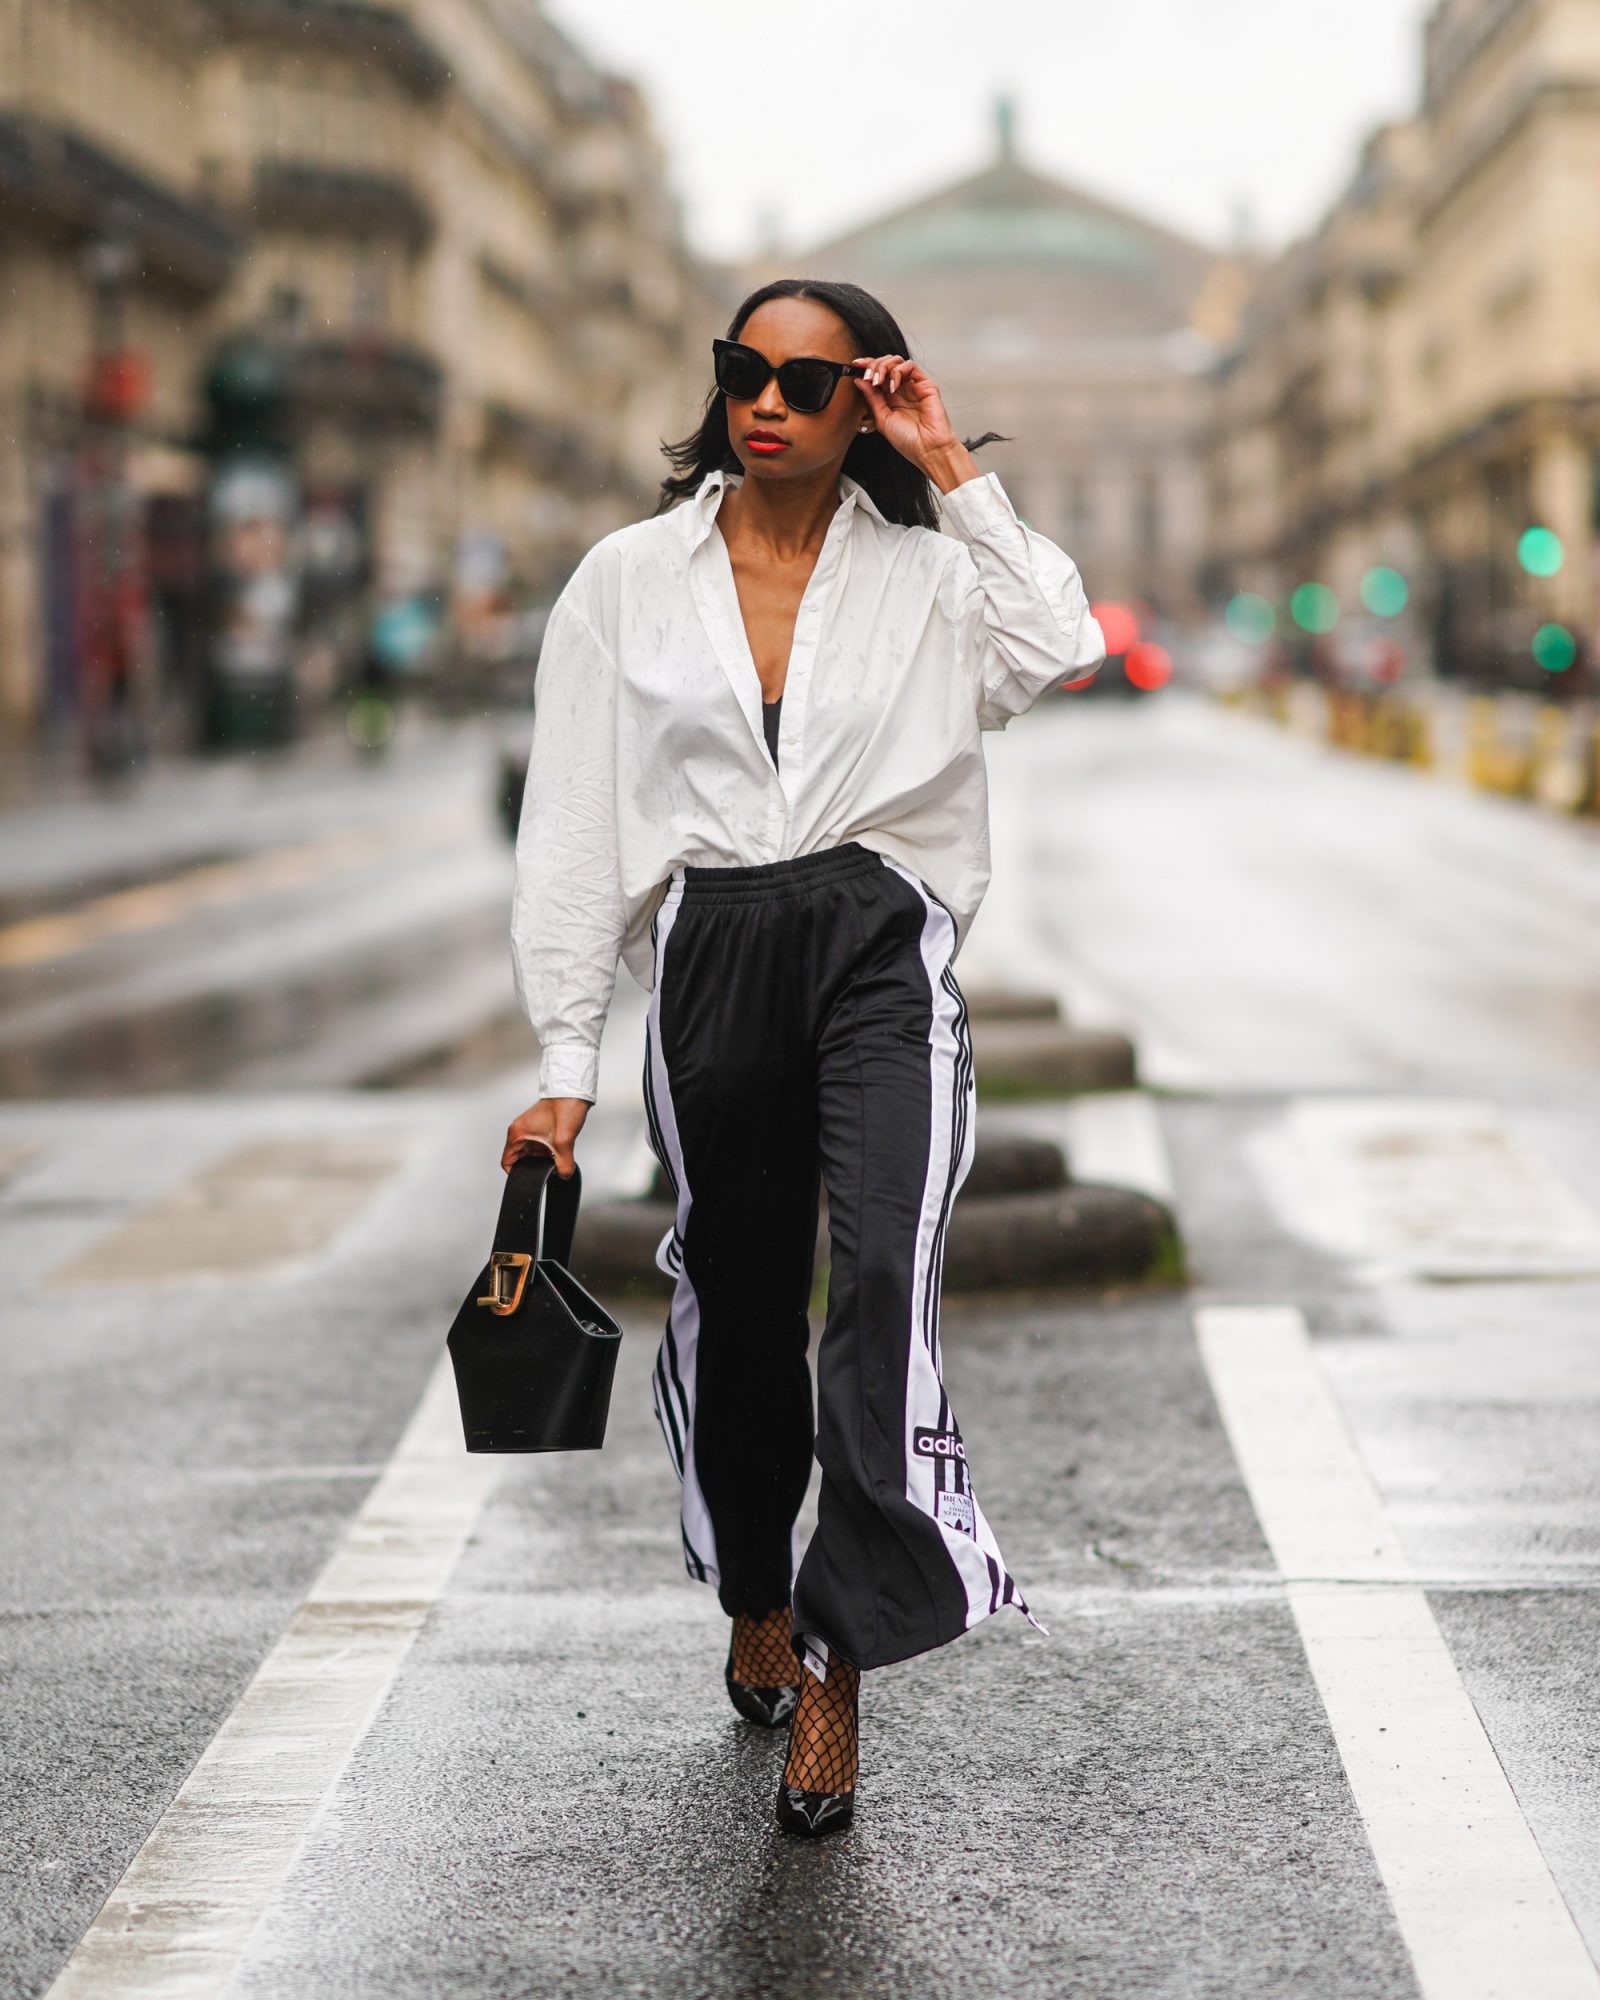 model walking in the road wearing sunglasses and handbag